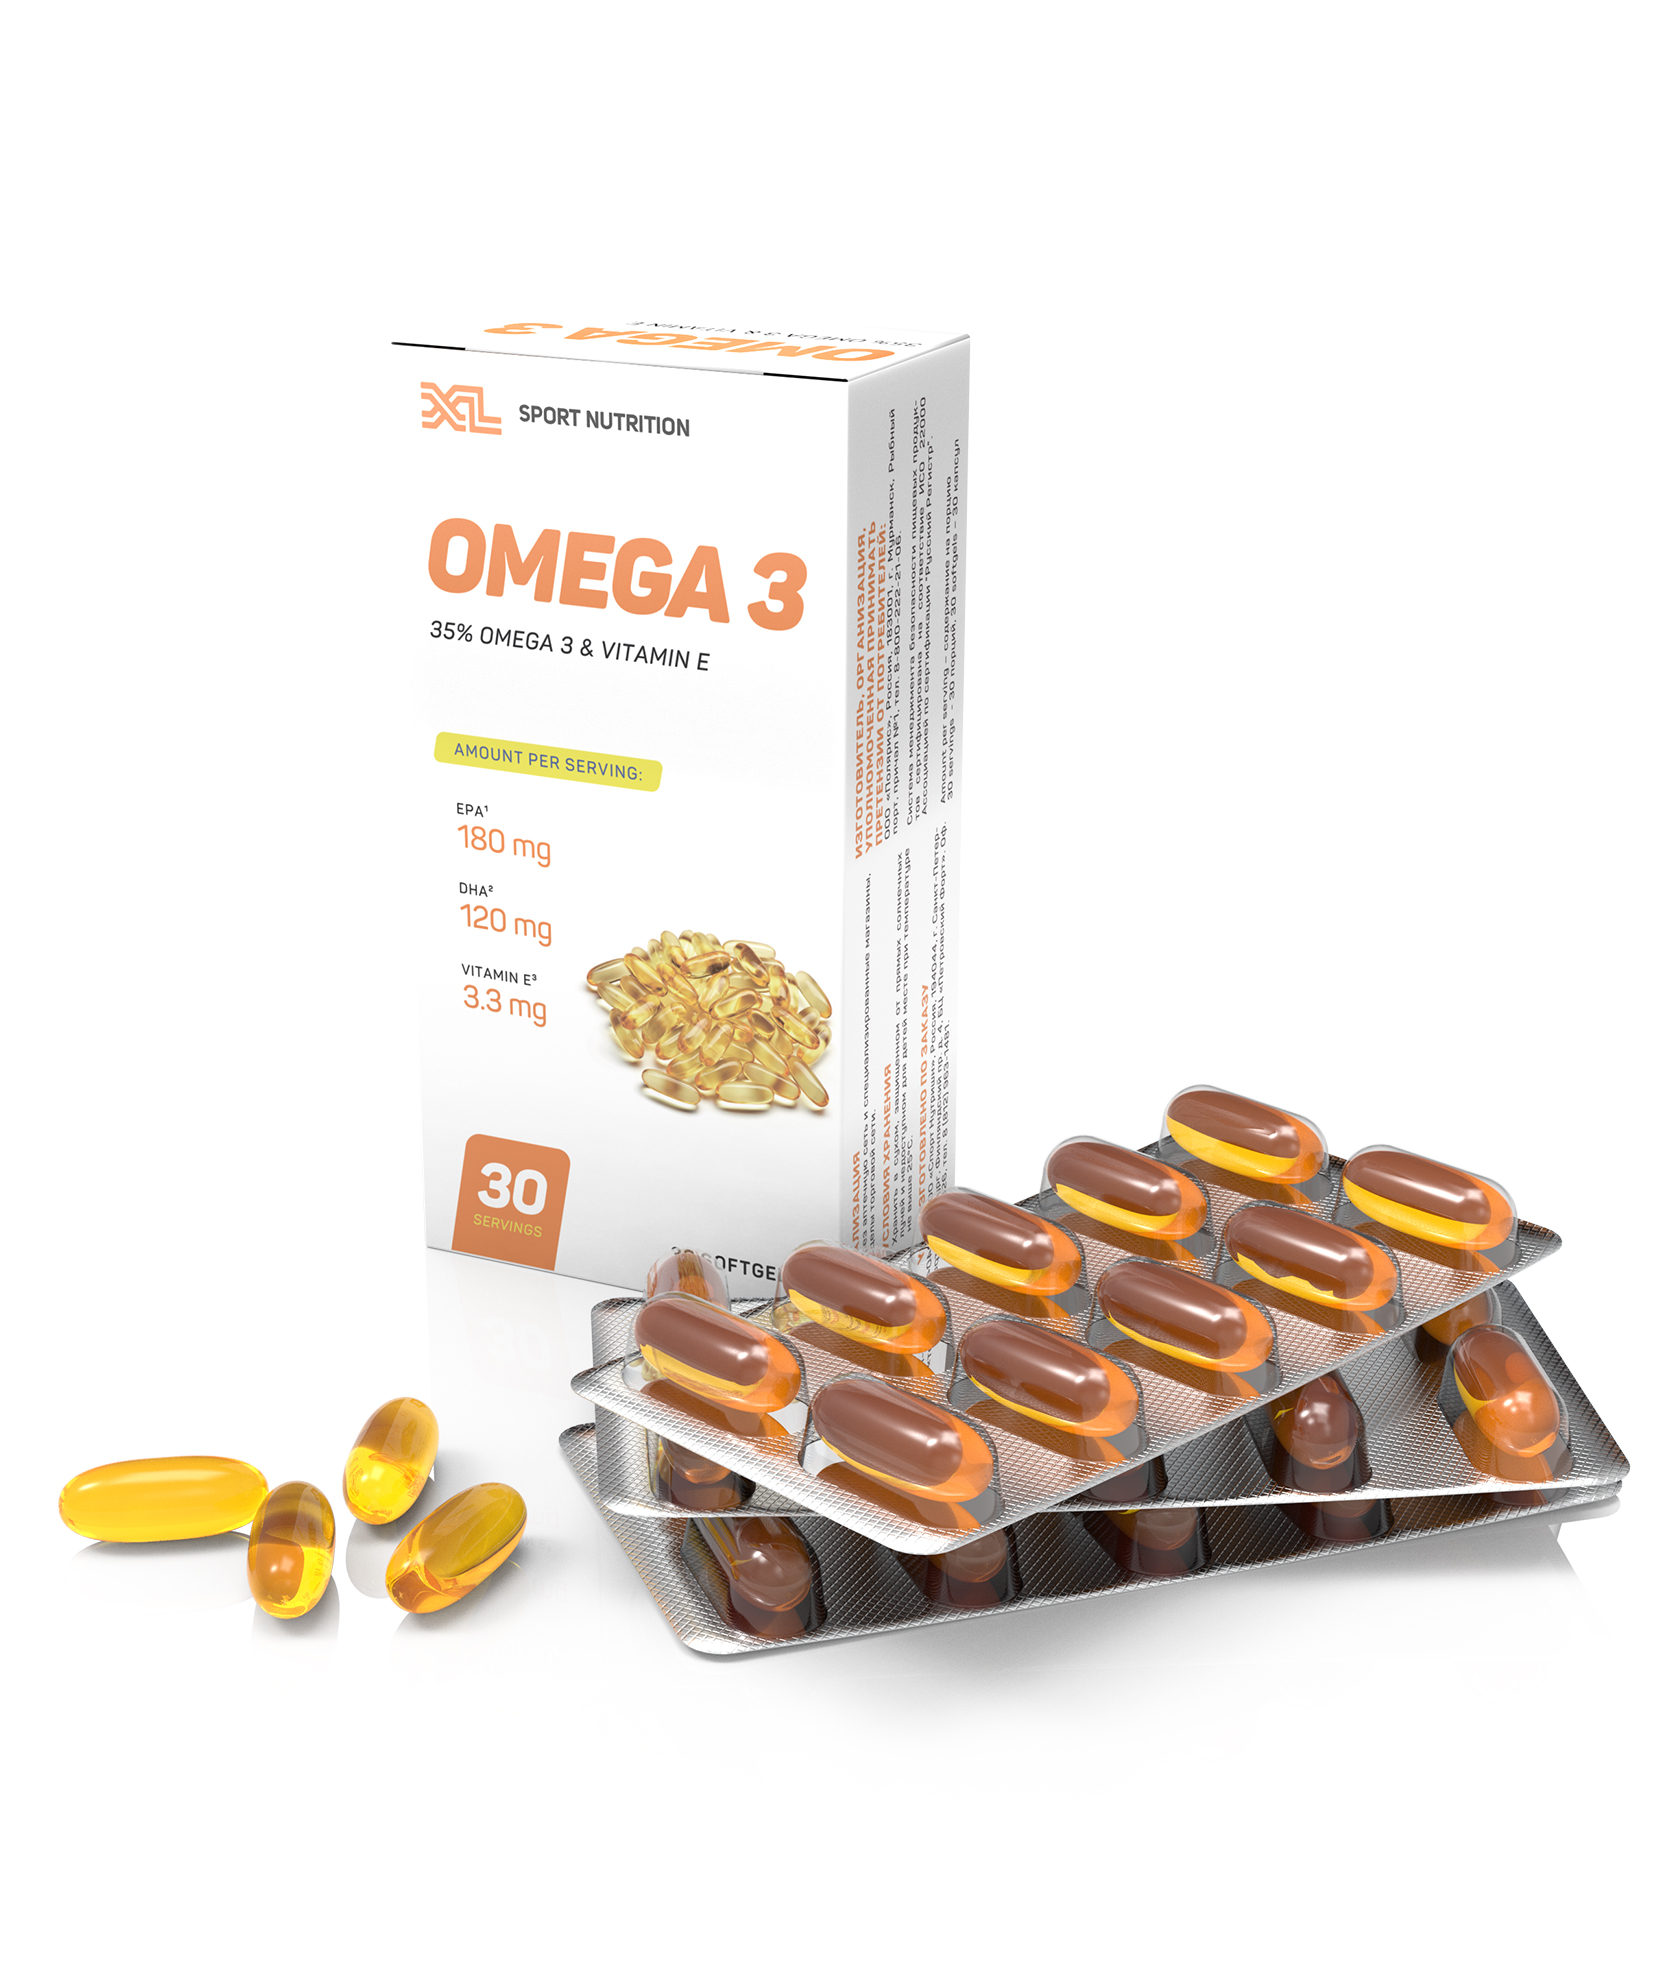 XL Omega 3 with vitamin E, 30 softgels